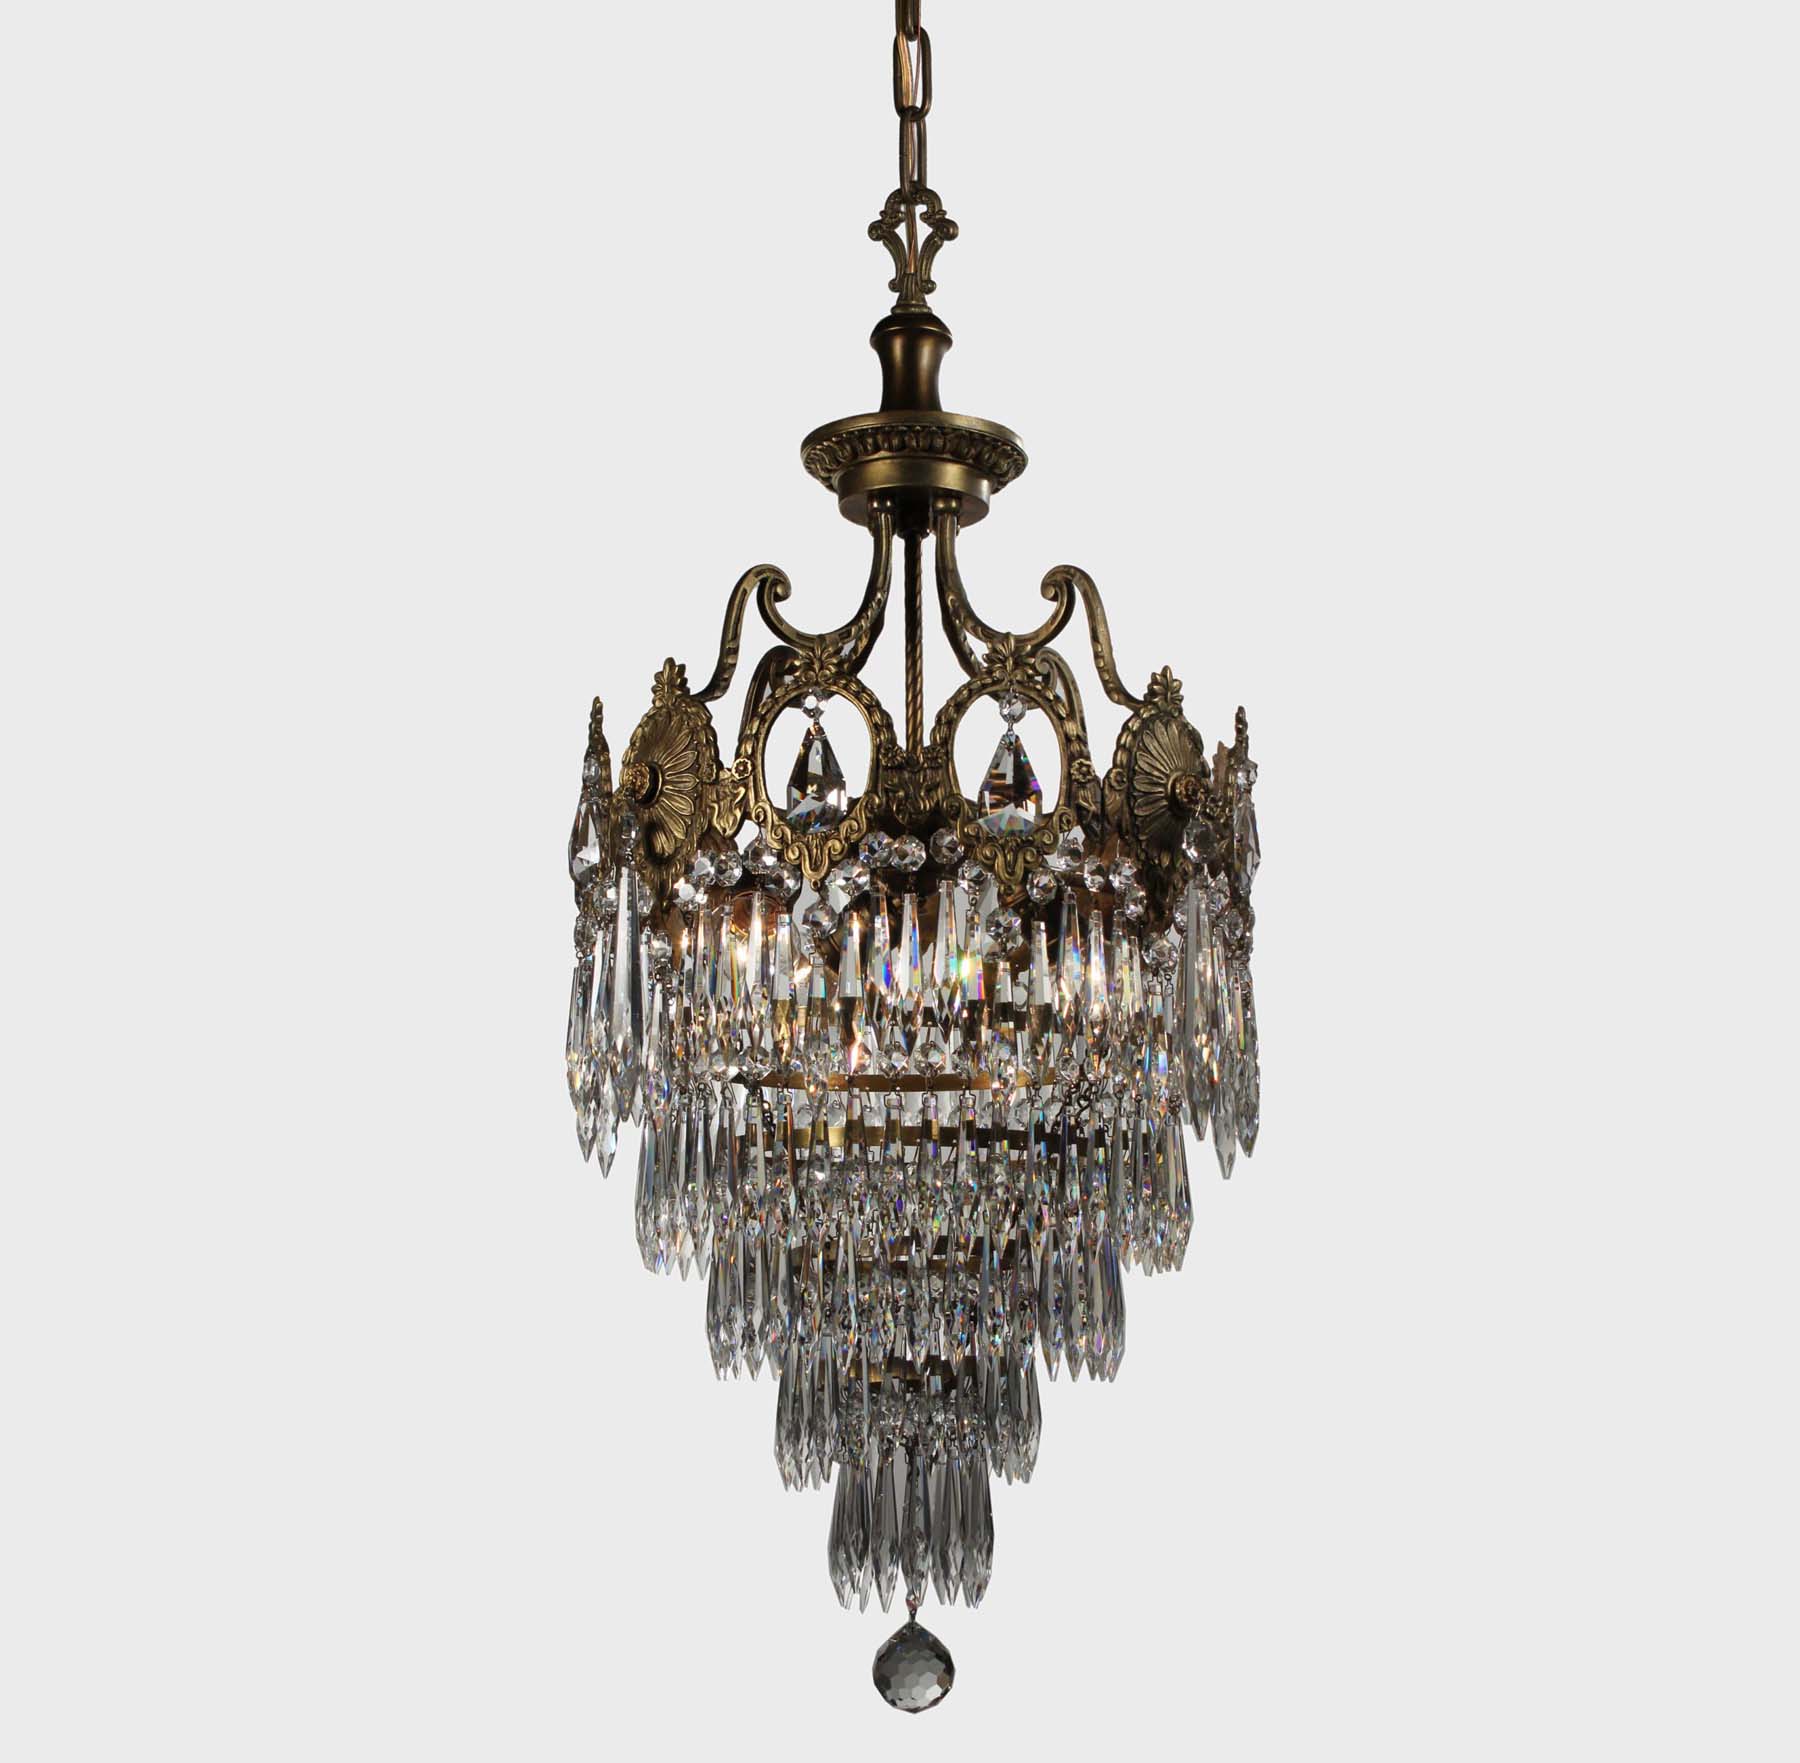 SOLD Neoclassical Brass Tiered Chandelier, Antique Lighting-68644